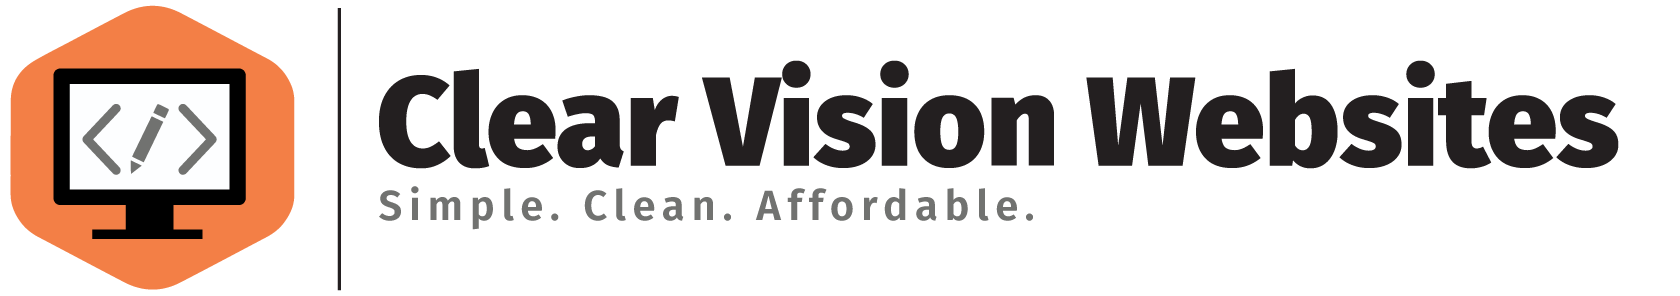 Clear Vision Websites